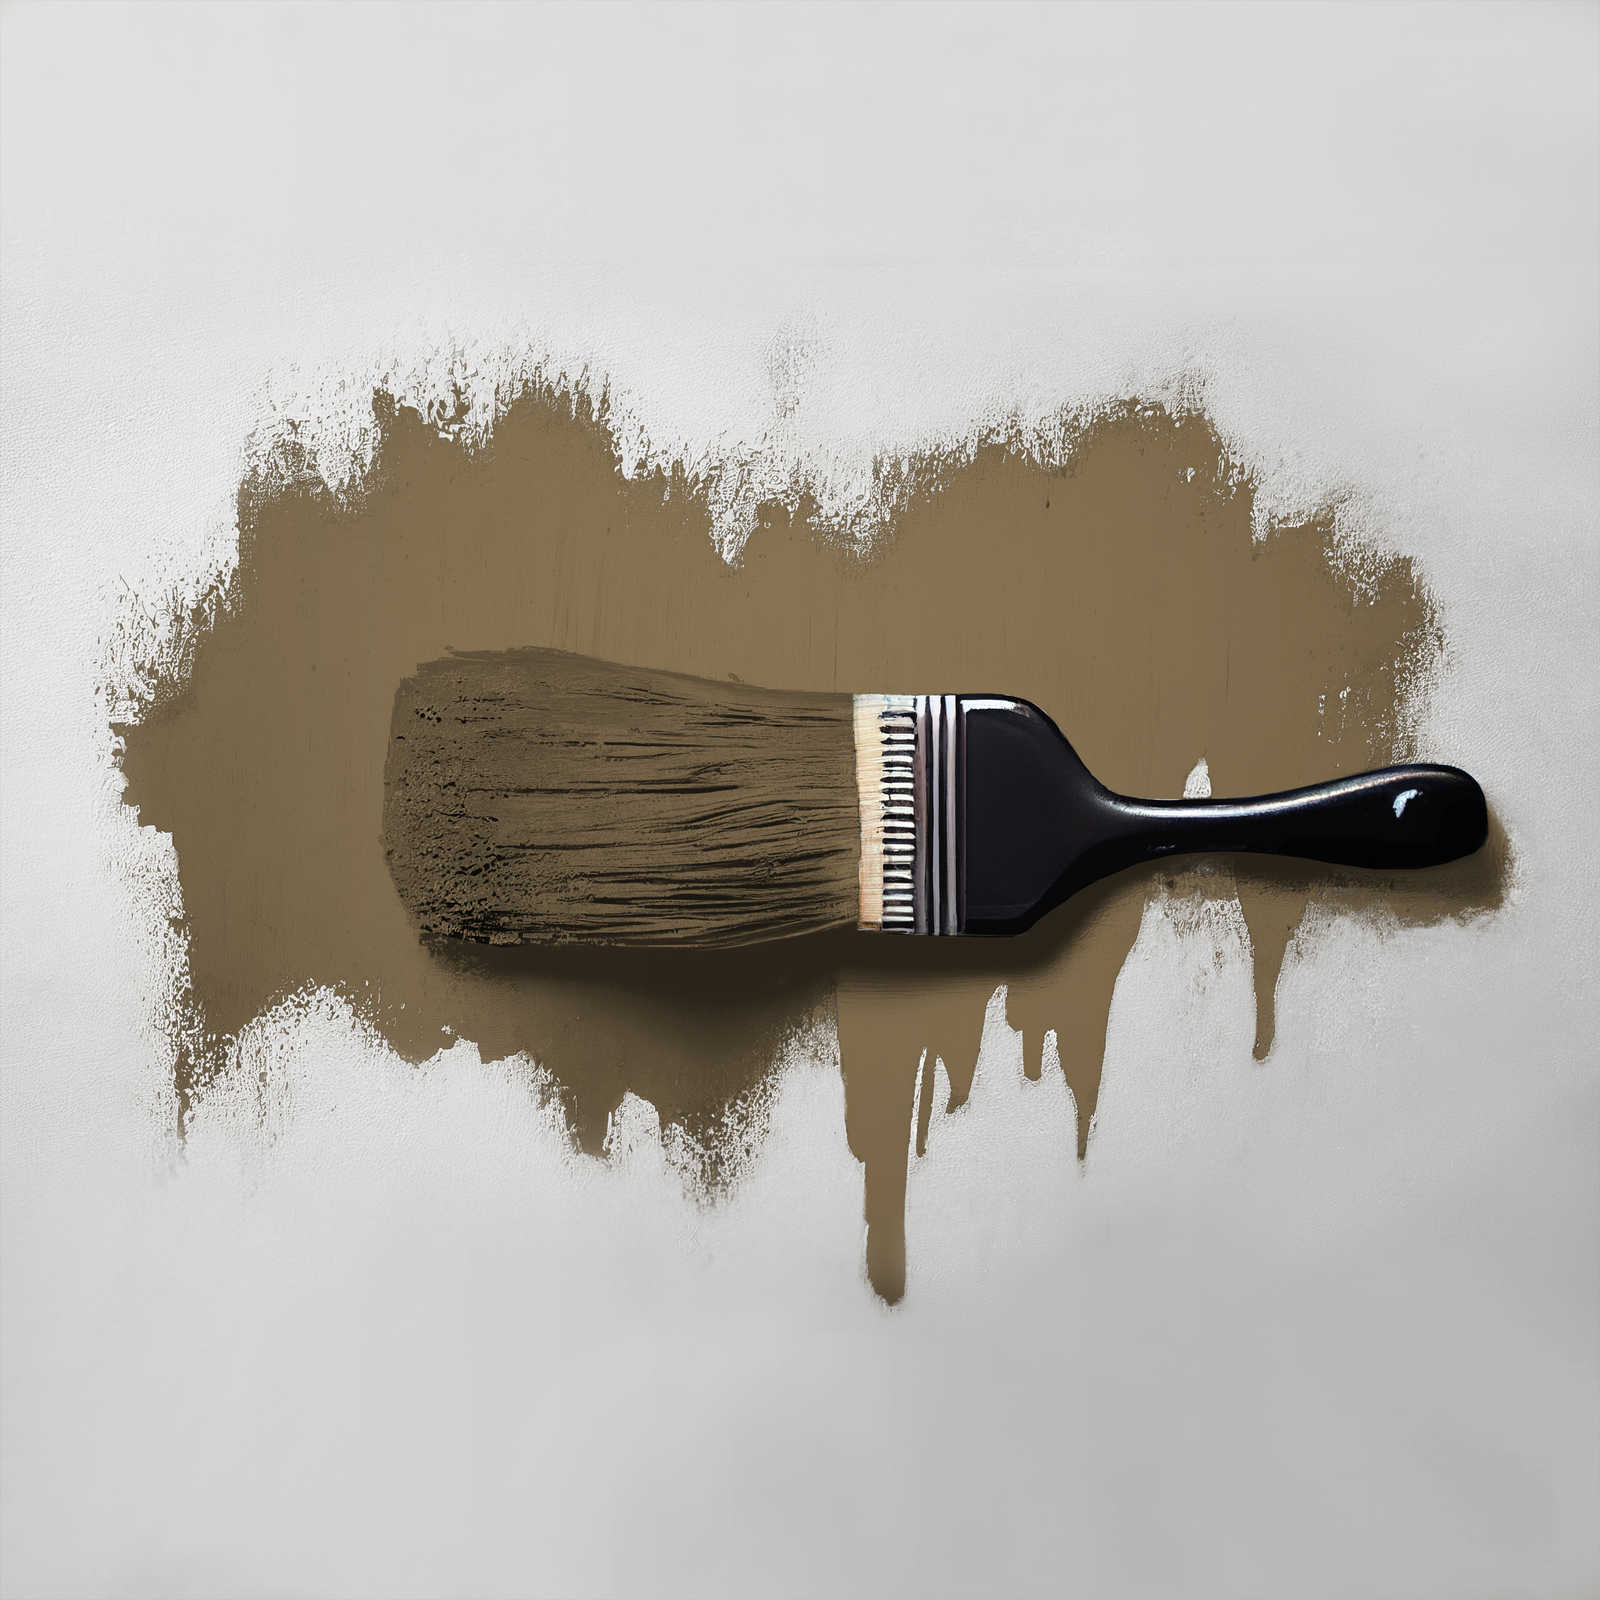             Peinture murale TCK6014 »Tasty Truffle« en brun profond – 2,5 litres
        